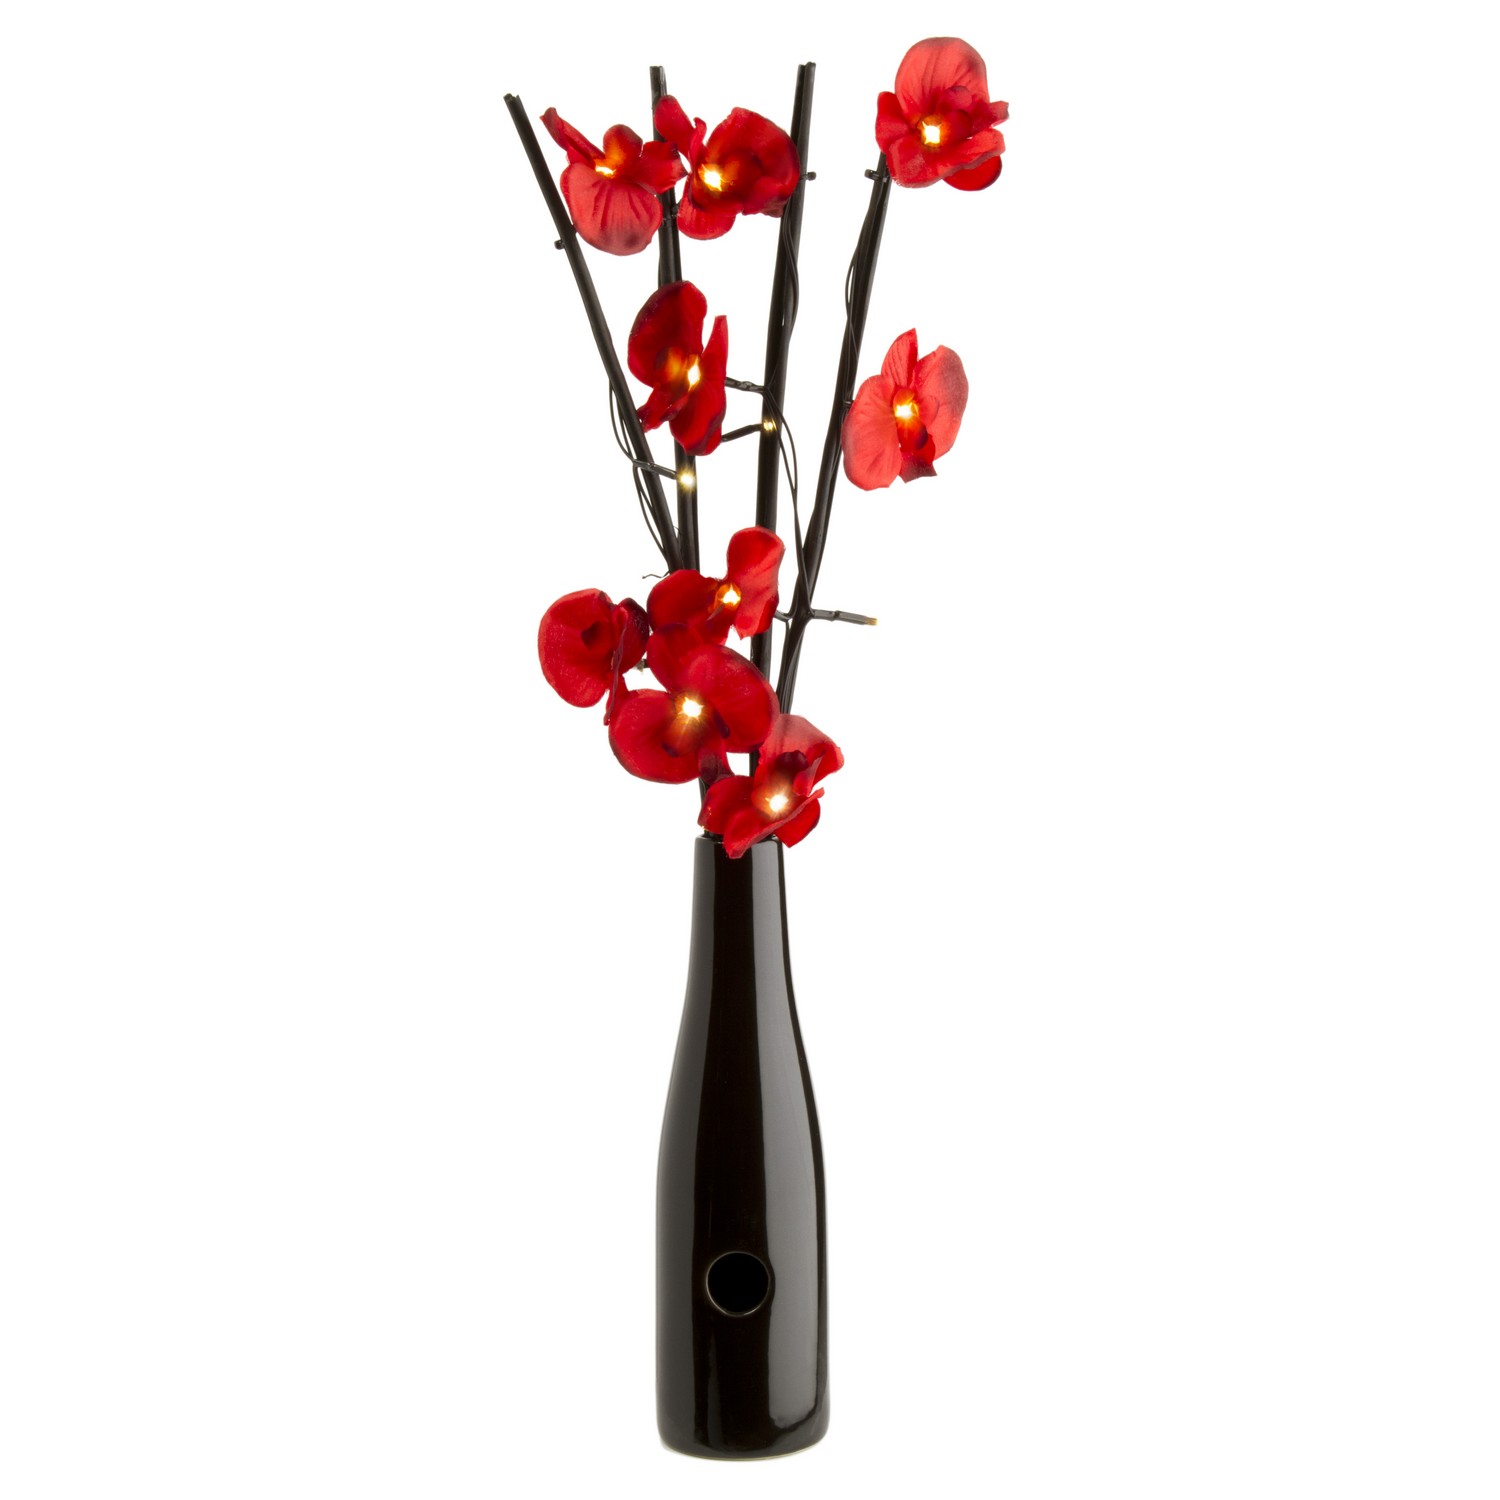 Buy 16 LED Red Orchid Flower Lights In Vase £6.99 | Home Decor ...